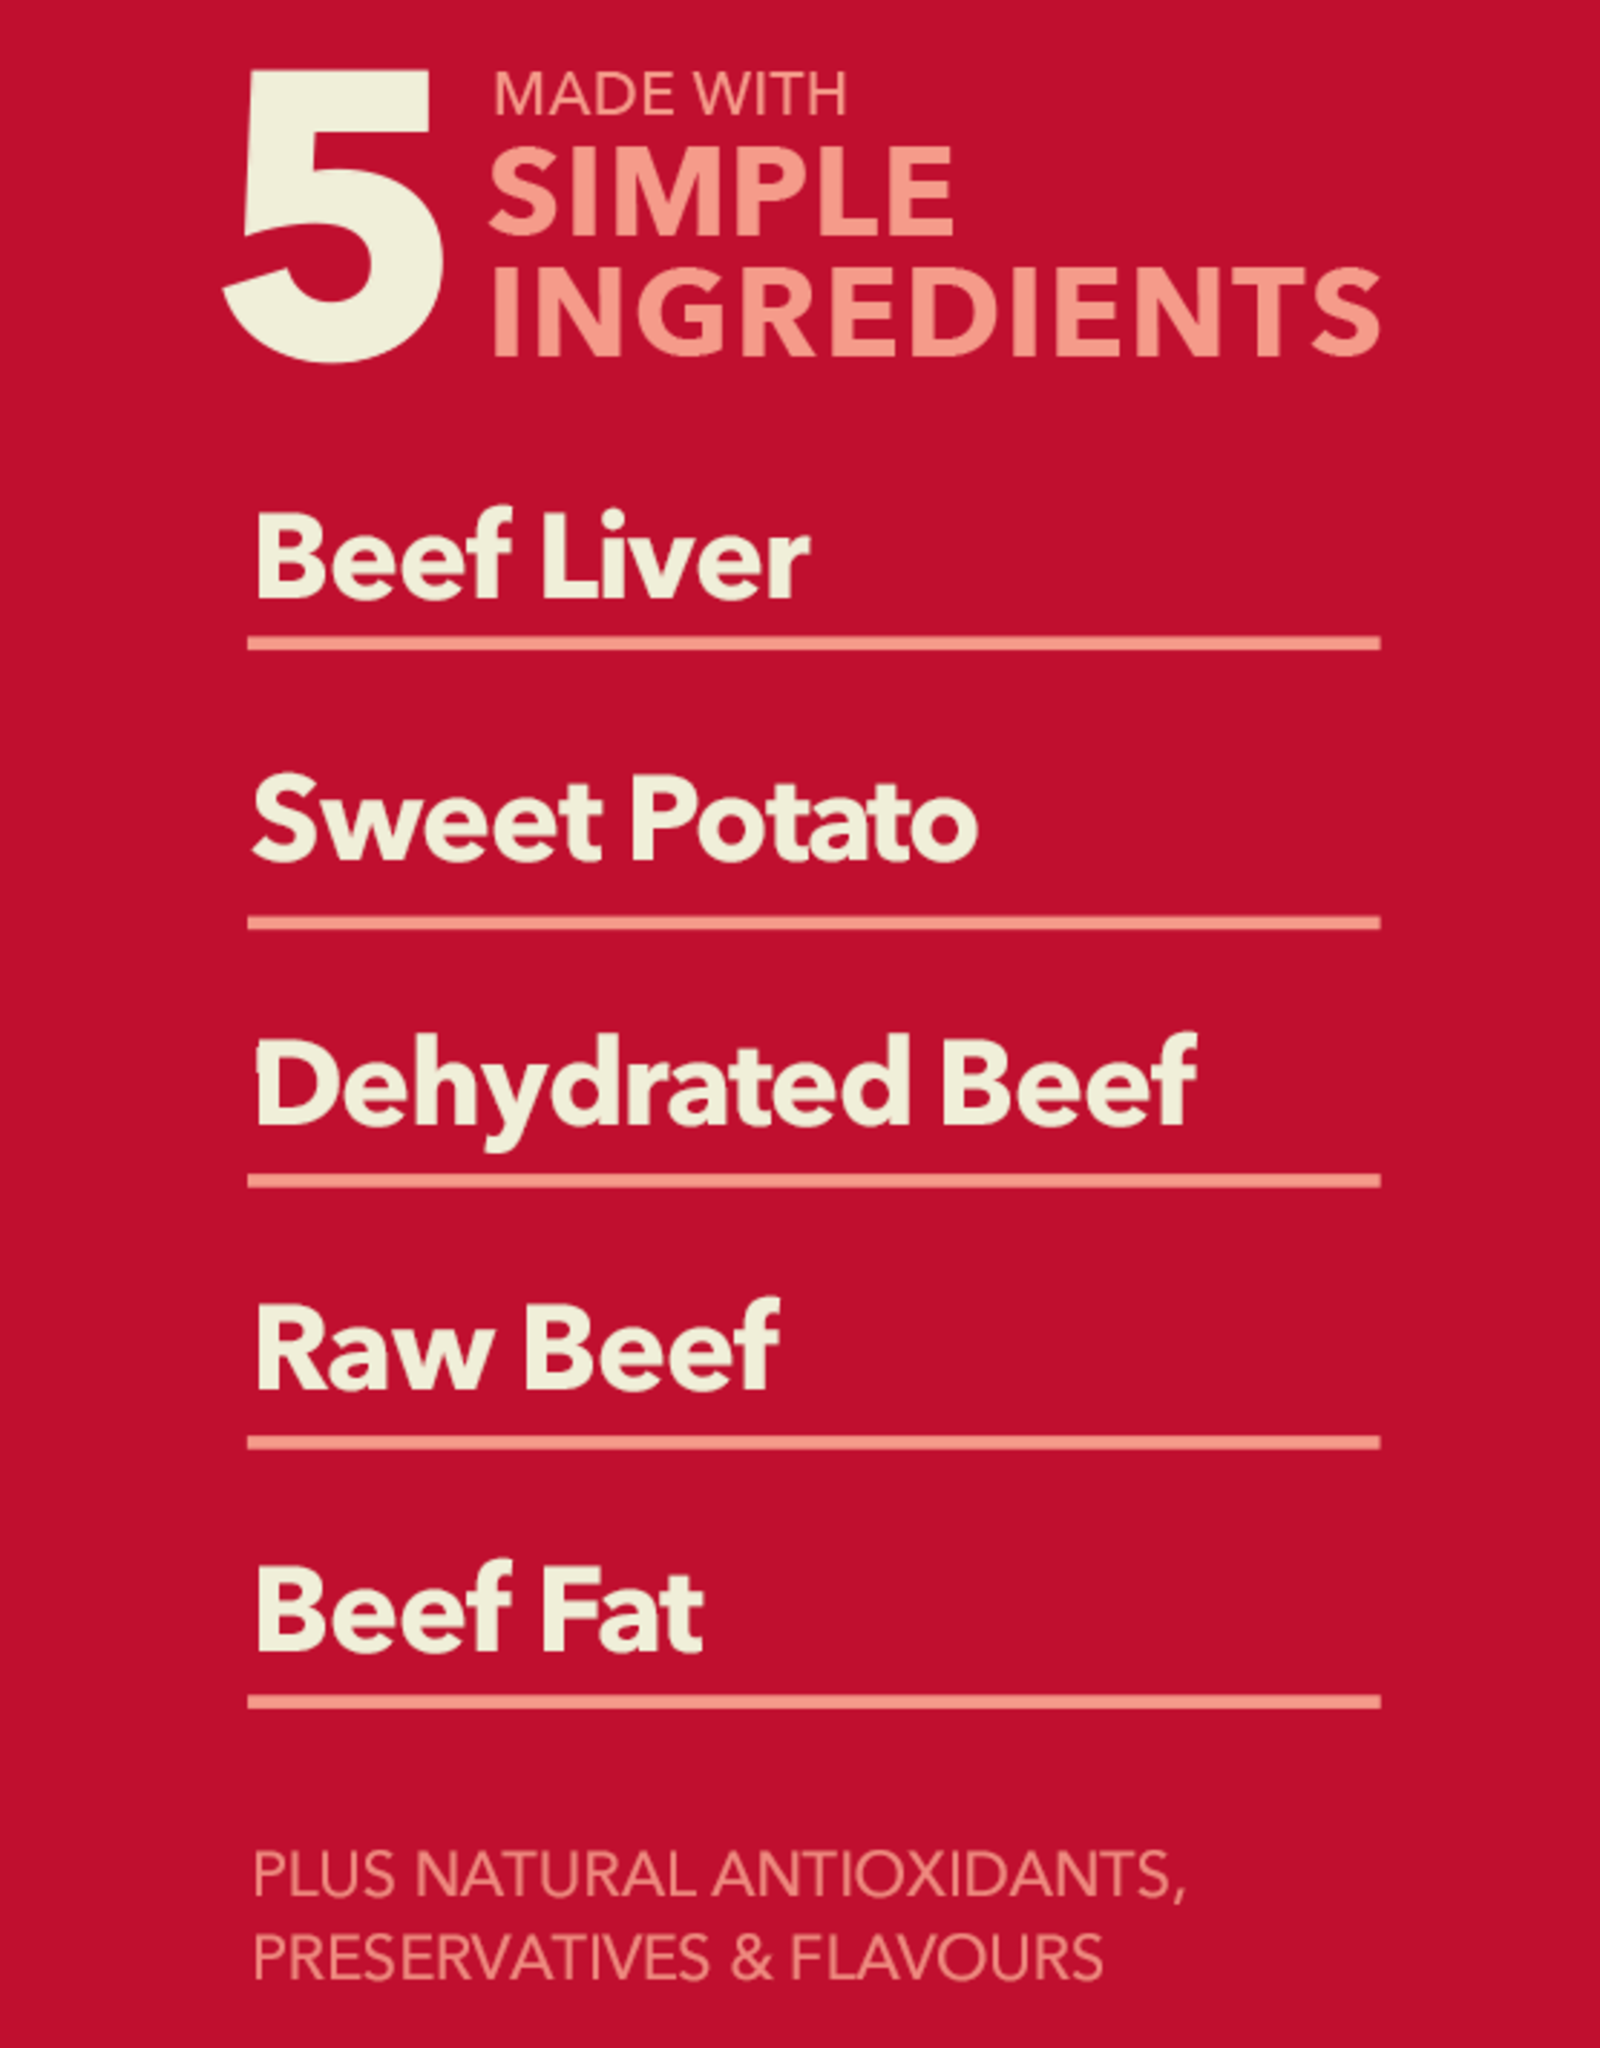 Acana Acana Crunchy Beef Liver Recipe Small to Medium Dog Treats 9 oz